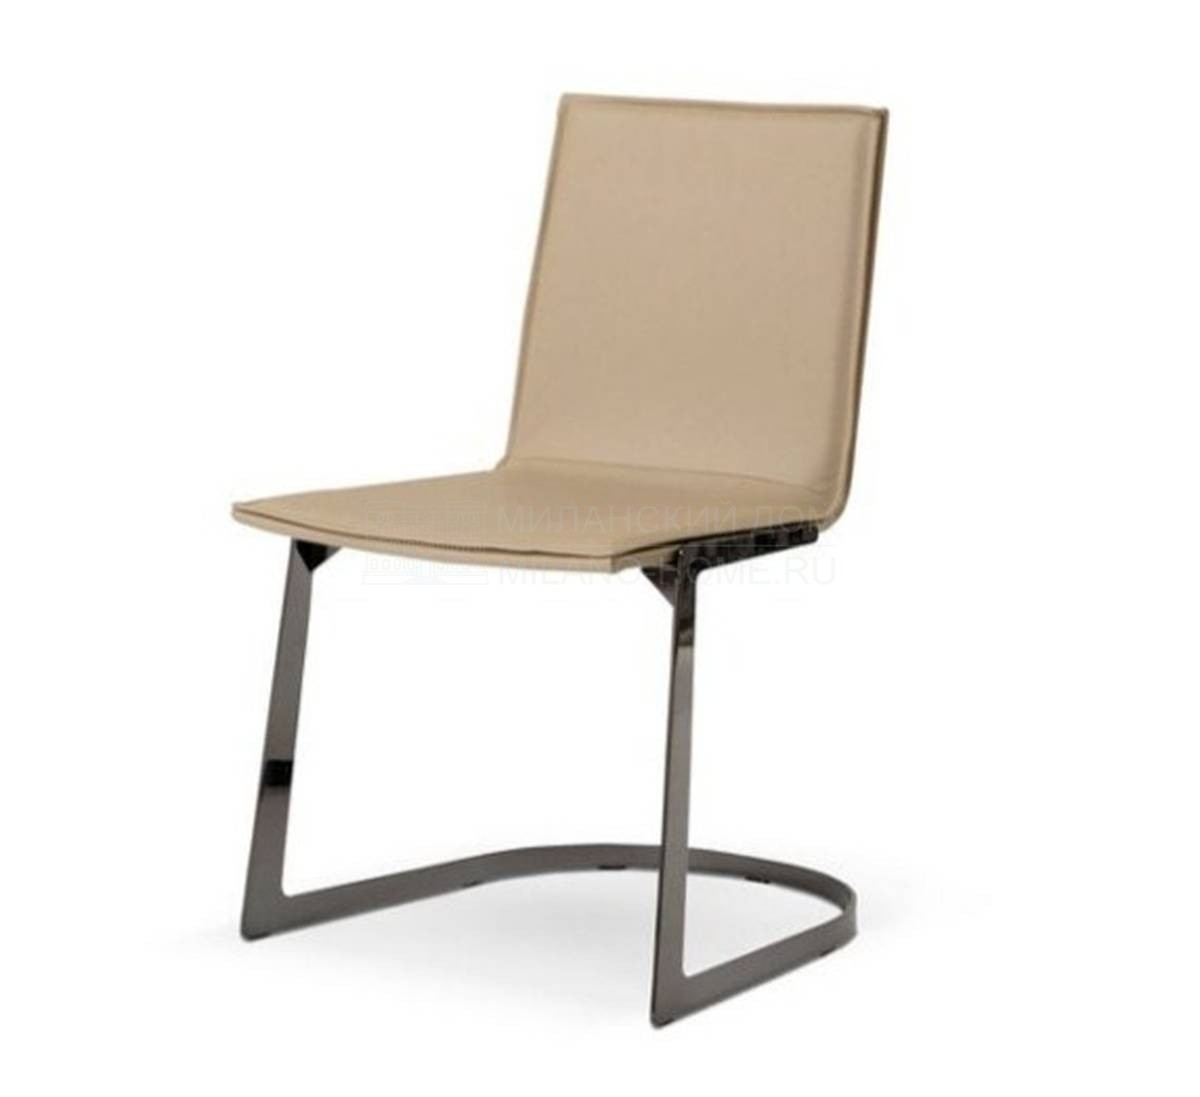 Кожаный стул Echoes chair из Франции фабрики ROCHE BOBOIS